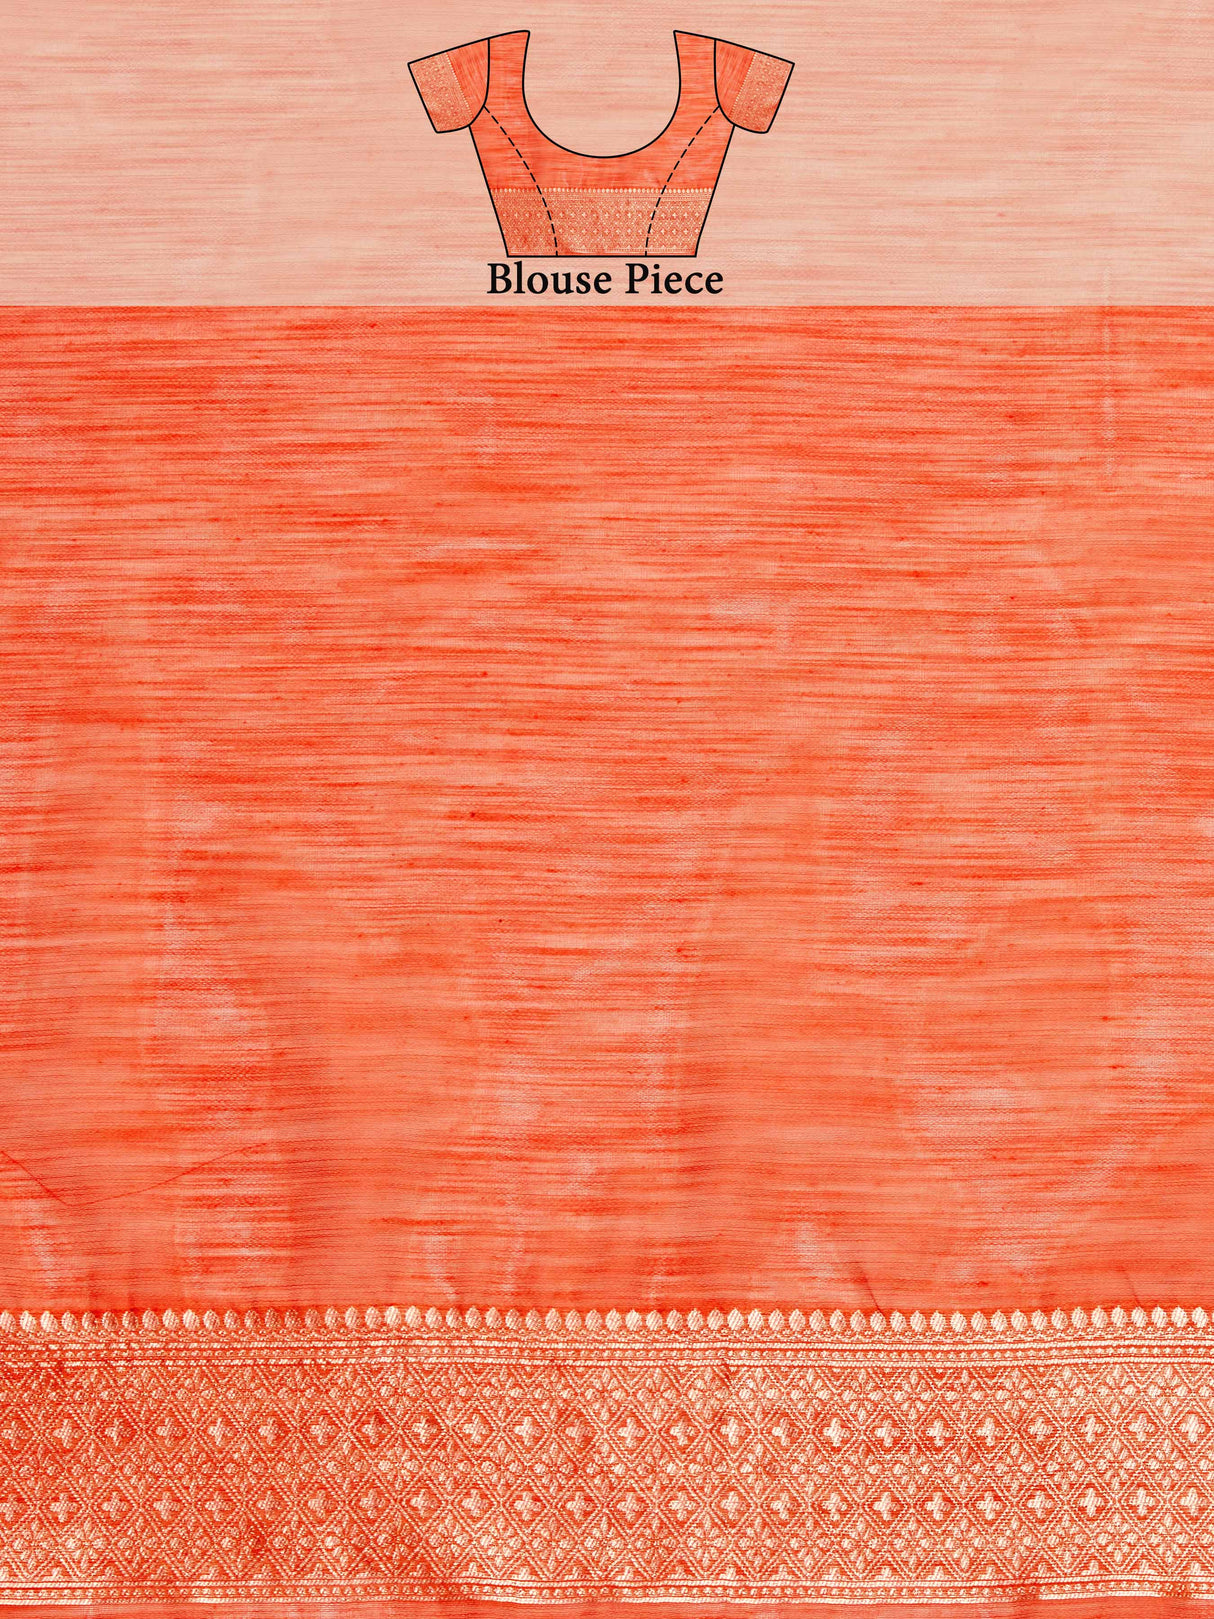 Mimosa Women's Woven Design Banarasi Poly Cotton Saree With Blouse Piece : SA00001061PC